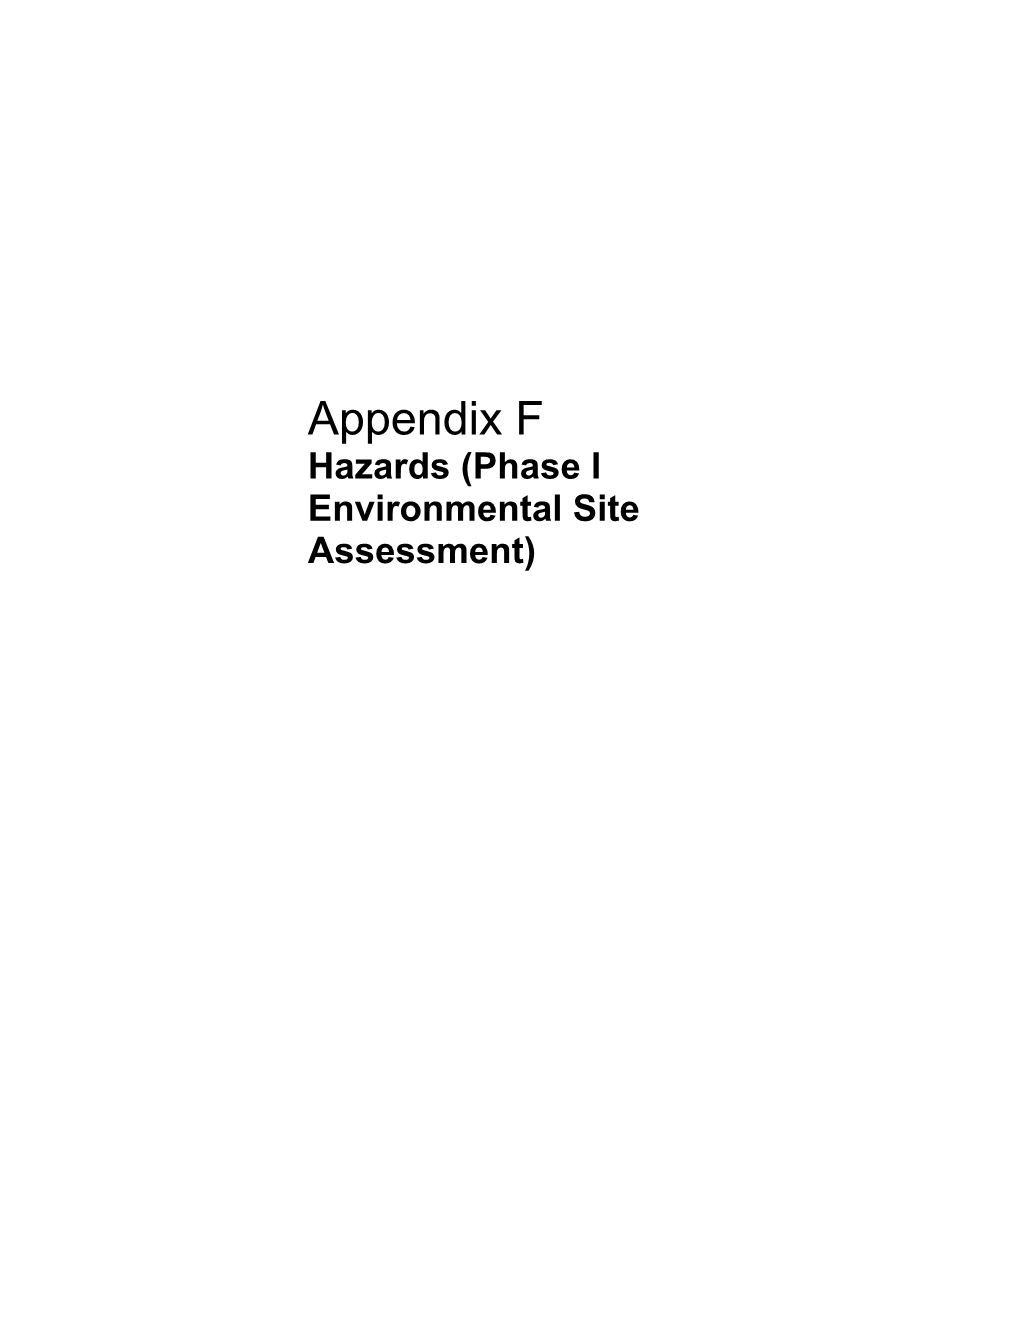 Appendix F Hazards (Phase I Environmental Site Assessment) PHASE I ENVIRONMENTAL ASSESSMENT REPORT NOVEMBER 21, 2017